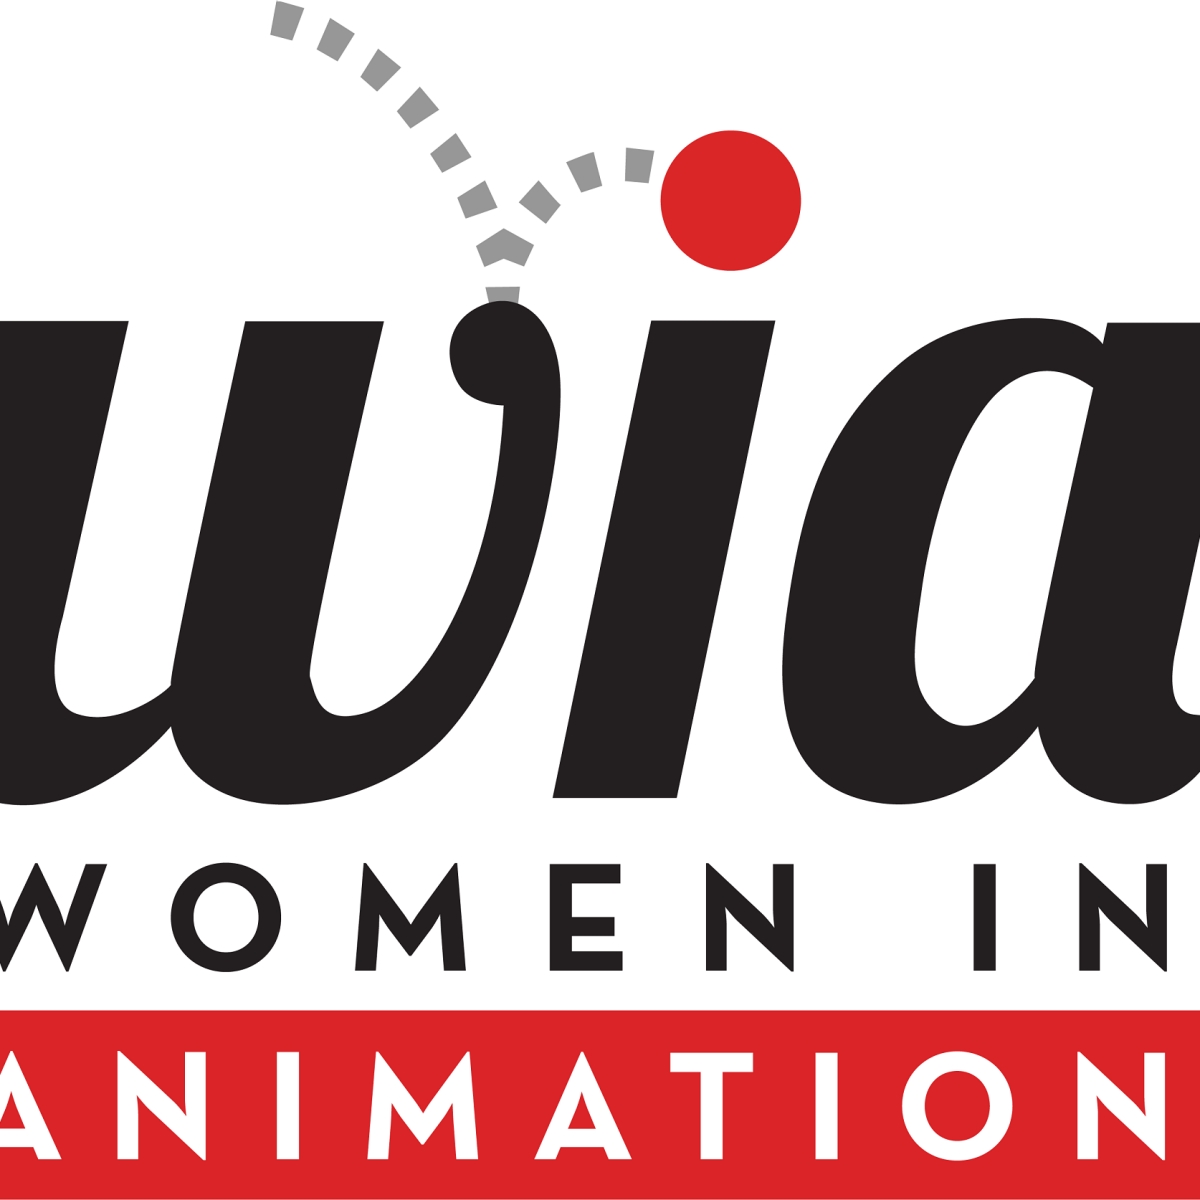 Image of Women in Animation logo.